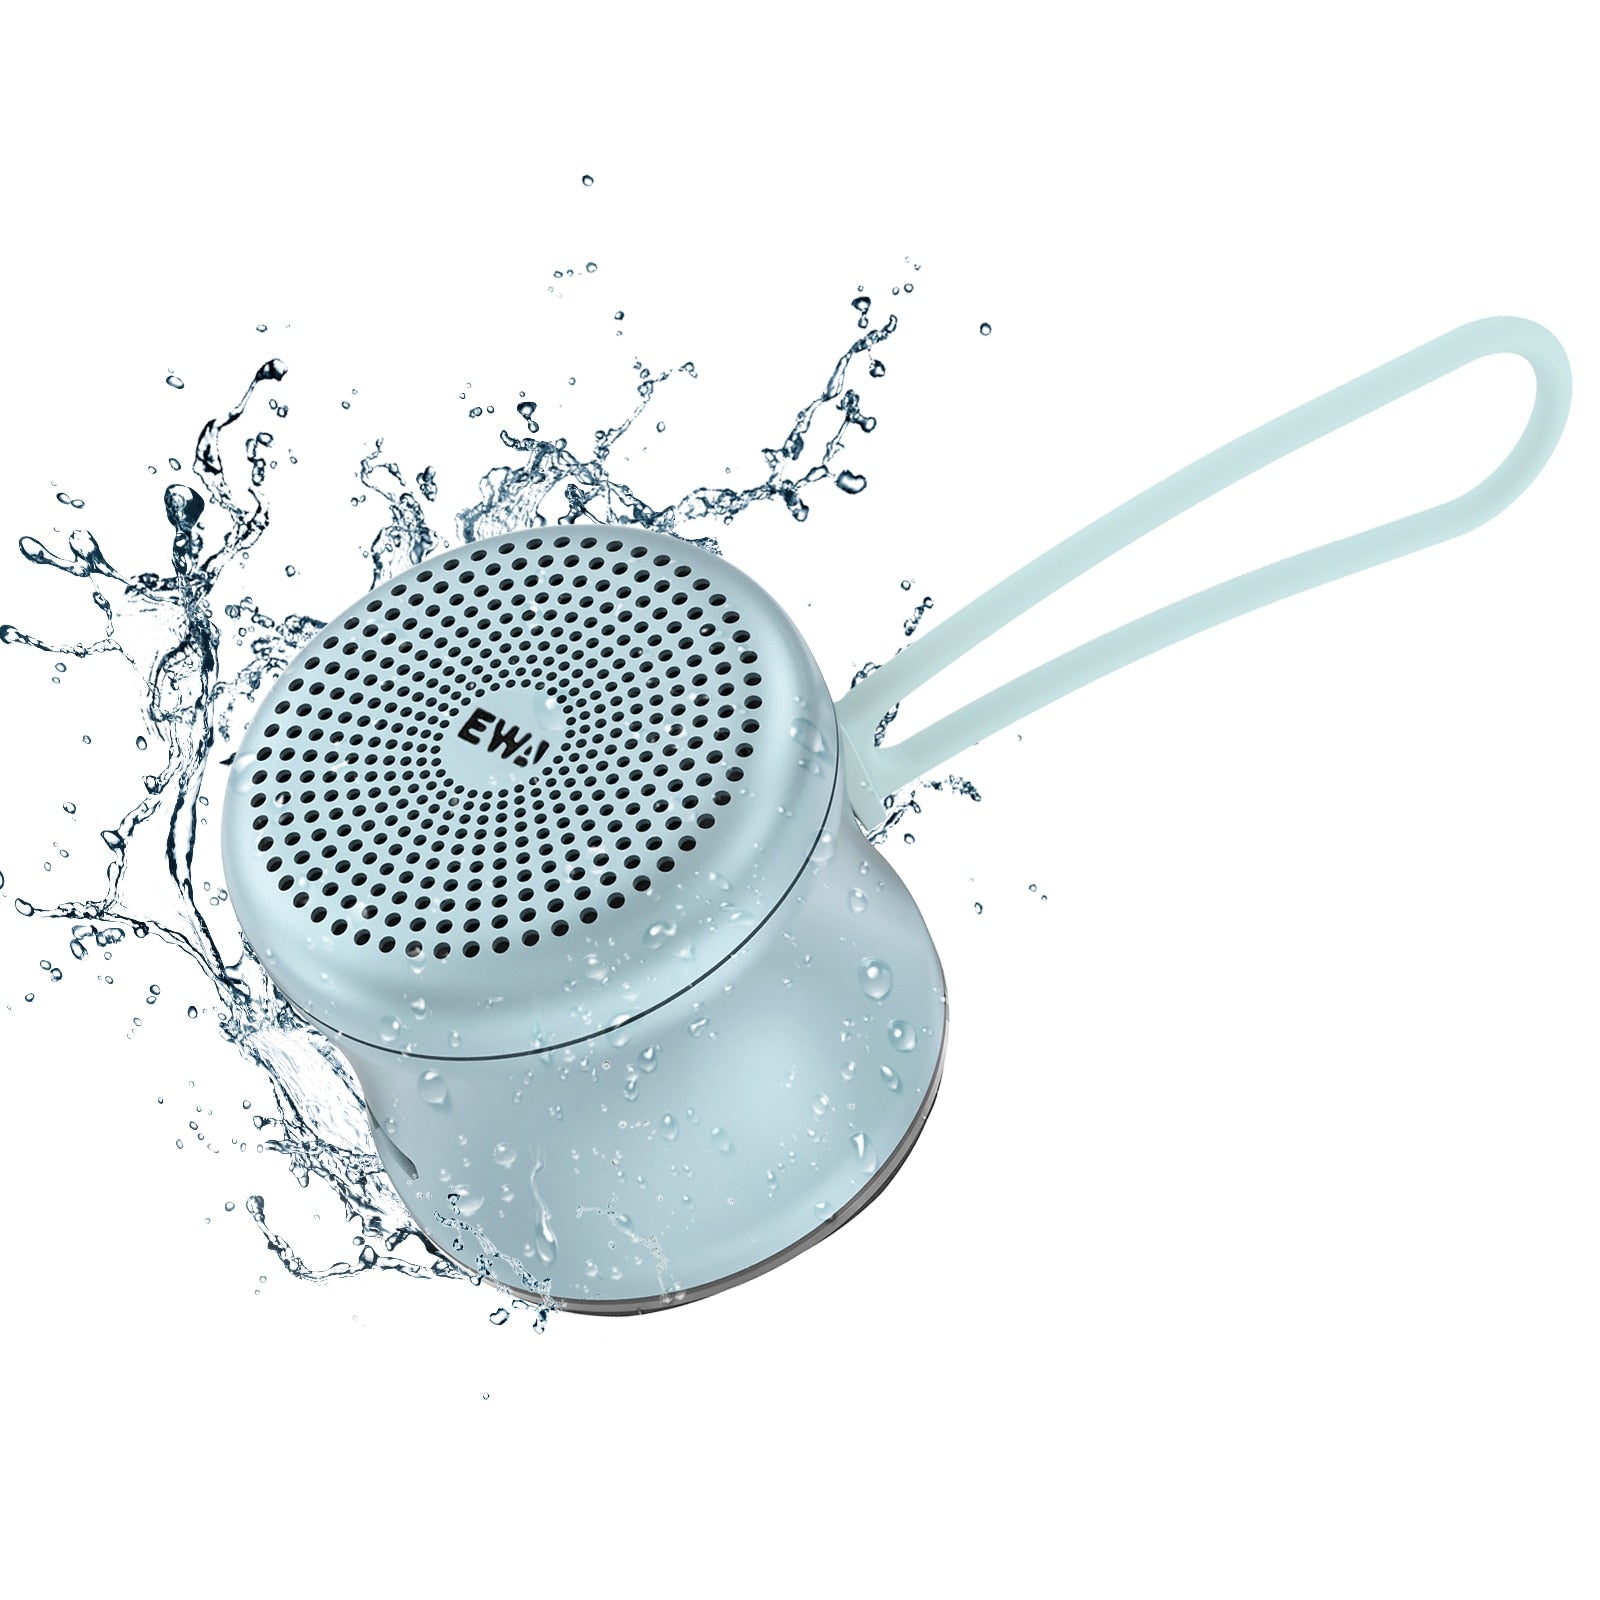 EWA Travel Case Packed, A106 Pro Portable Bluetooth Speaker with Custom Bass Radiator, Brief Design, IP67 Waterproof, Perfect Mini Speaker for Shower, Room, Bike, Car (Black) mini speakers DailyAlertDeals USA A119-Blue 